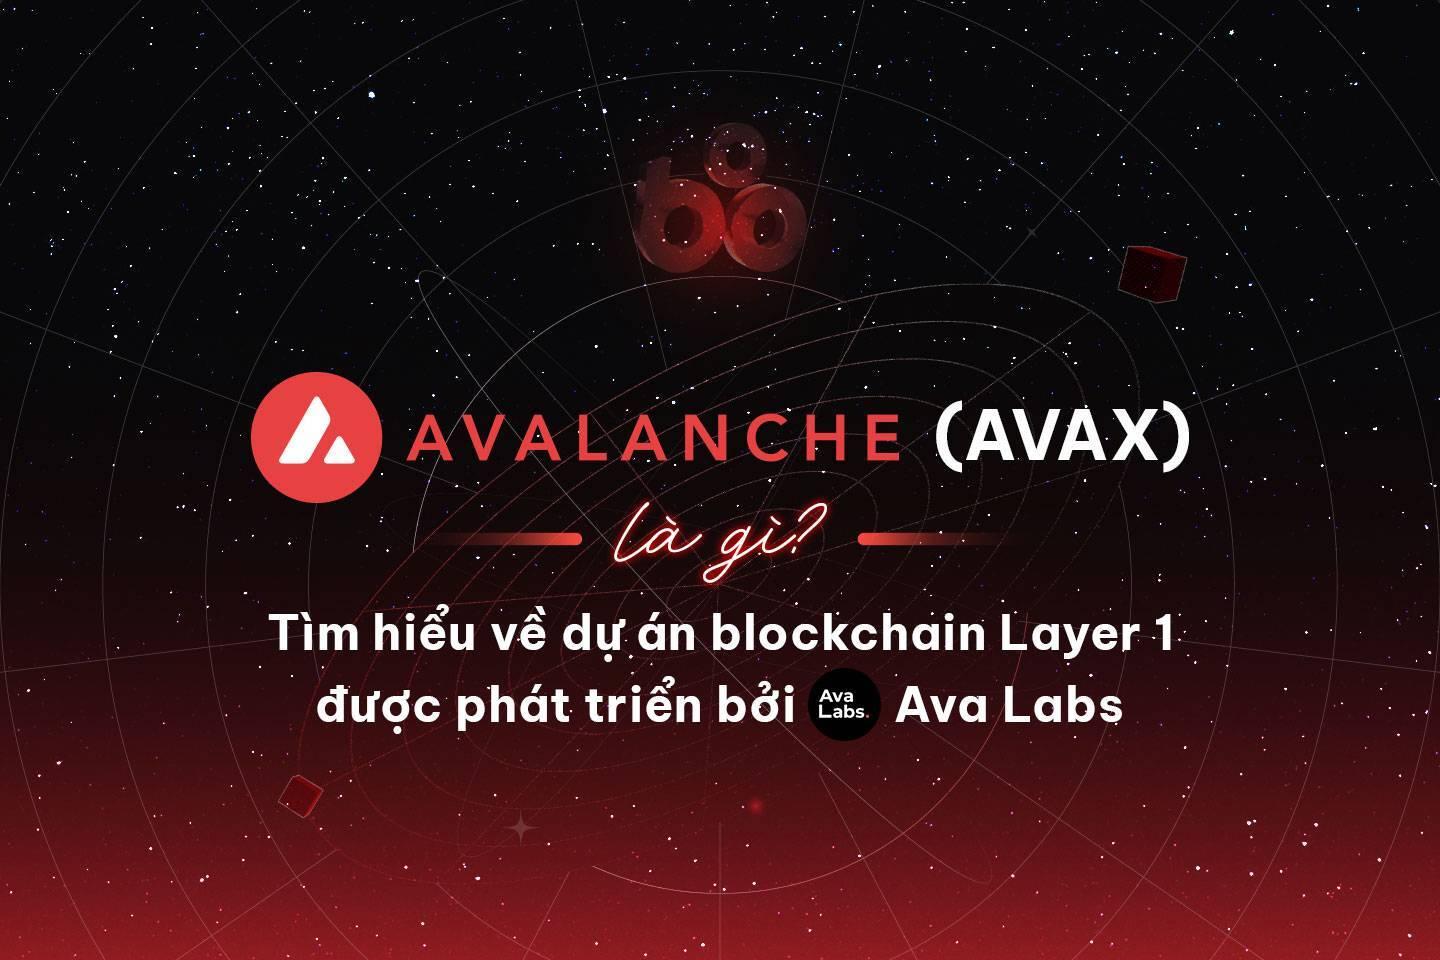 avalanche-avax-la-gi-tim-hieu-ve-du-an-blockchain-layer-1-duoc-phat-trien-boi-ava-labs